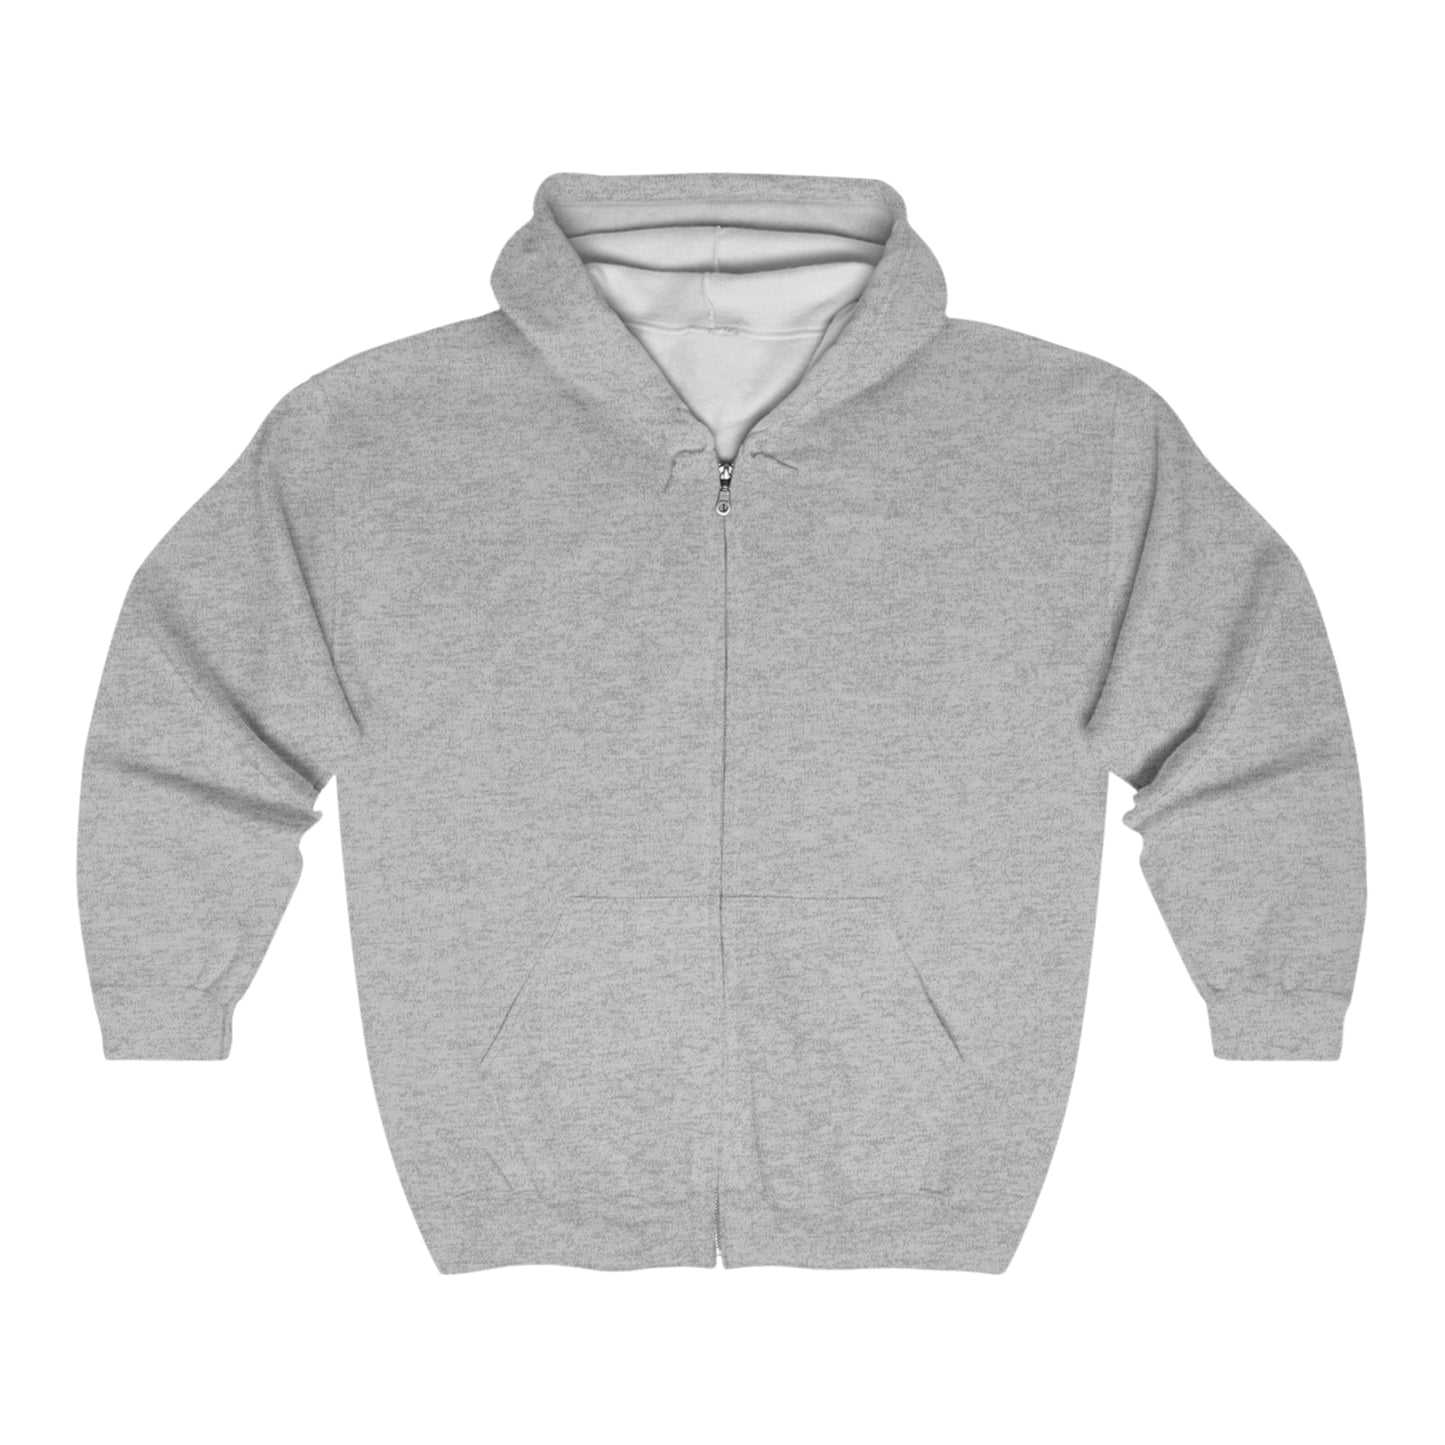 WWMMD Unisex Full Zip Hooded Sweatshirt